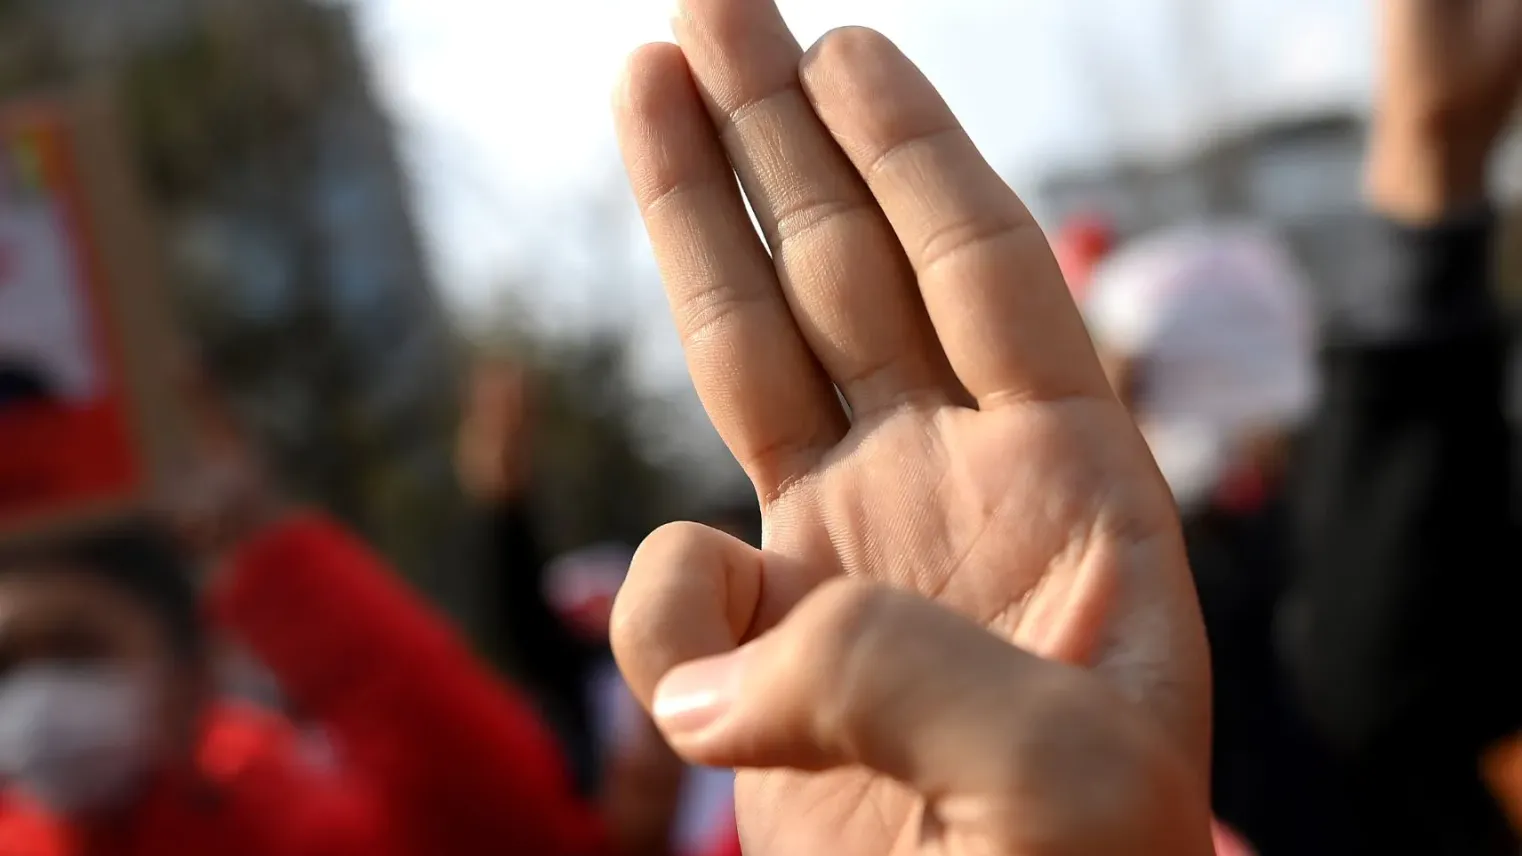 Myanmar_Protestors_three-finger gesture_resistance symbol.